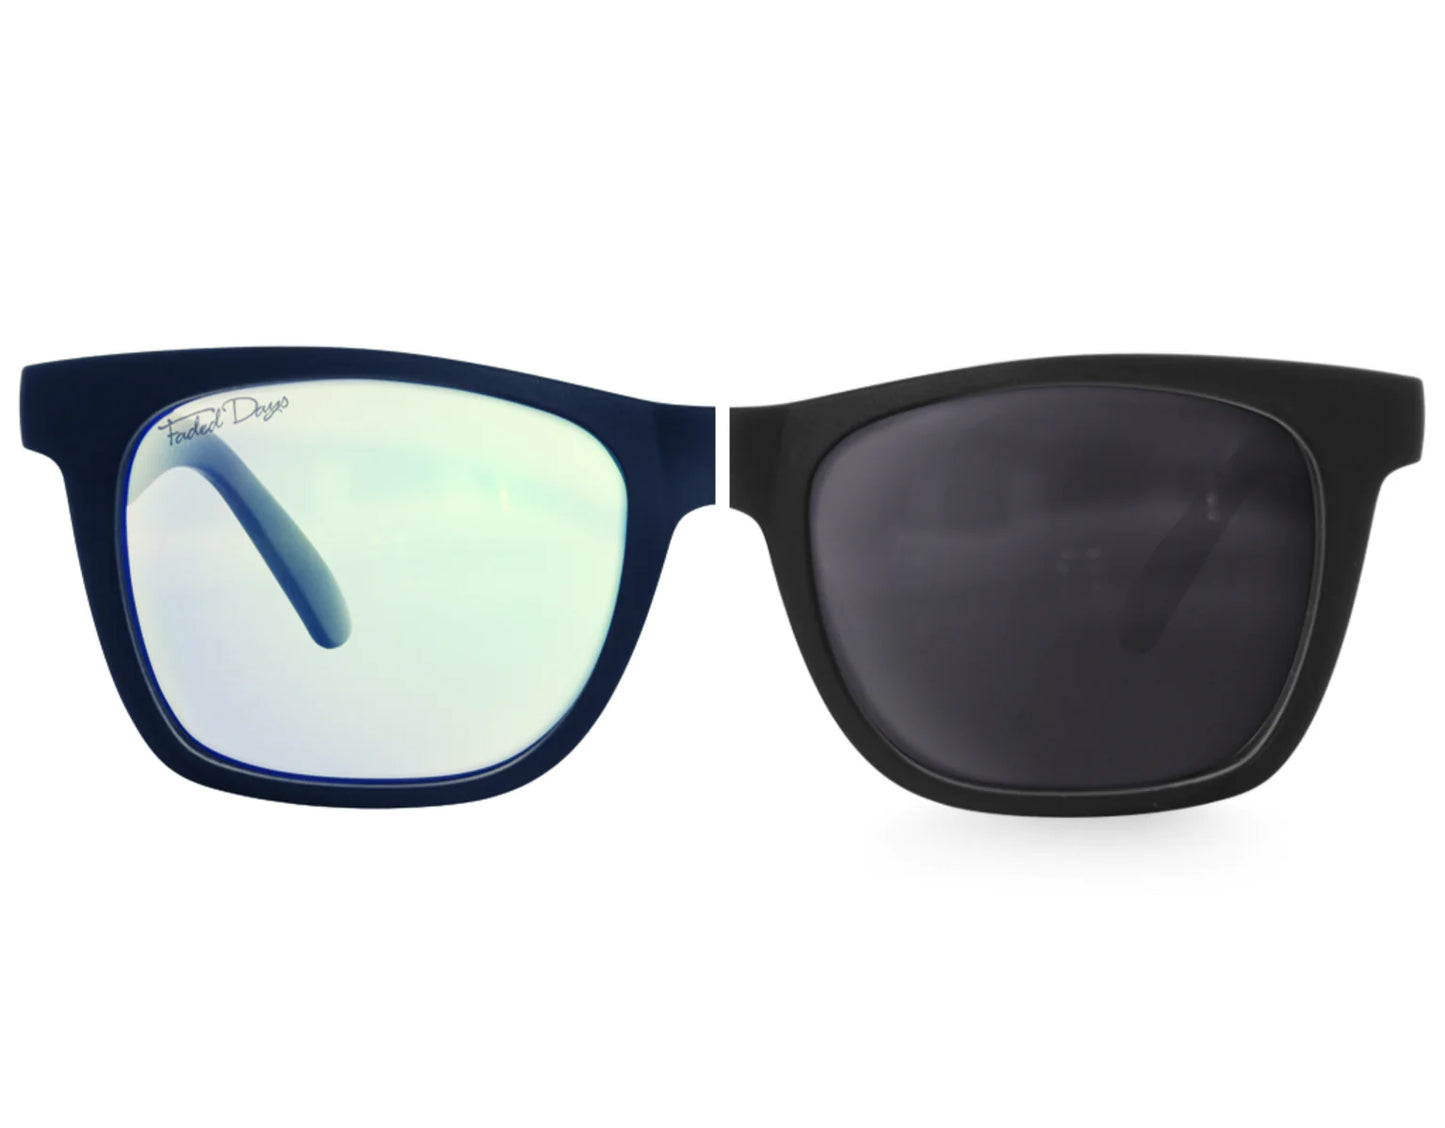 XXL Prescription Sunglasses/Glasses for Big Heads CLASSIC 165mm